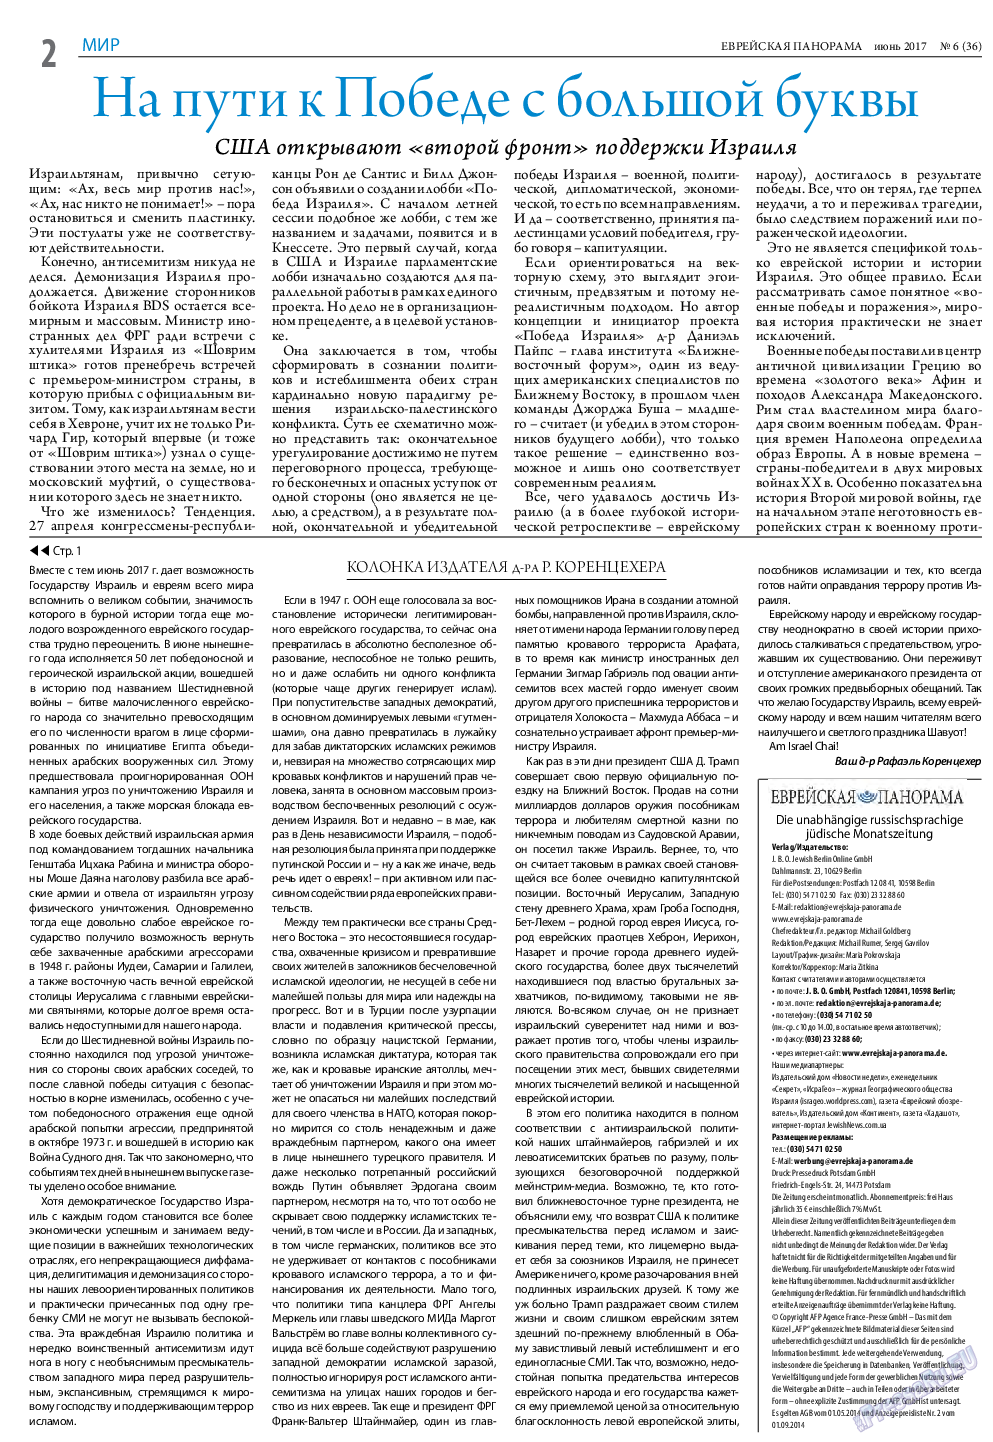 Еврейская панорама, газета. 2017 №6 стр.2